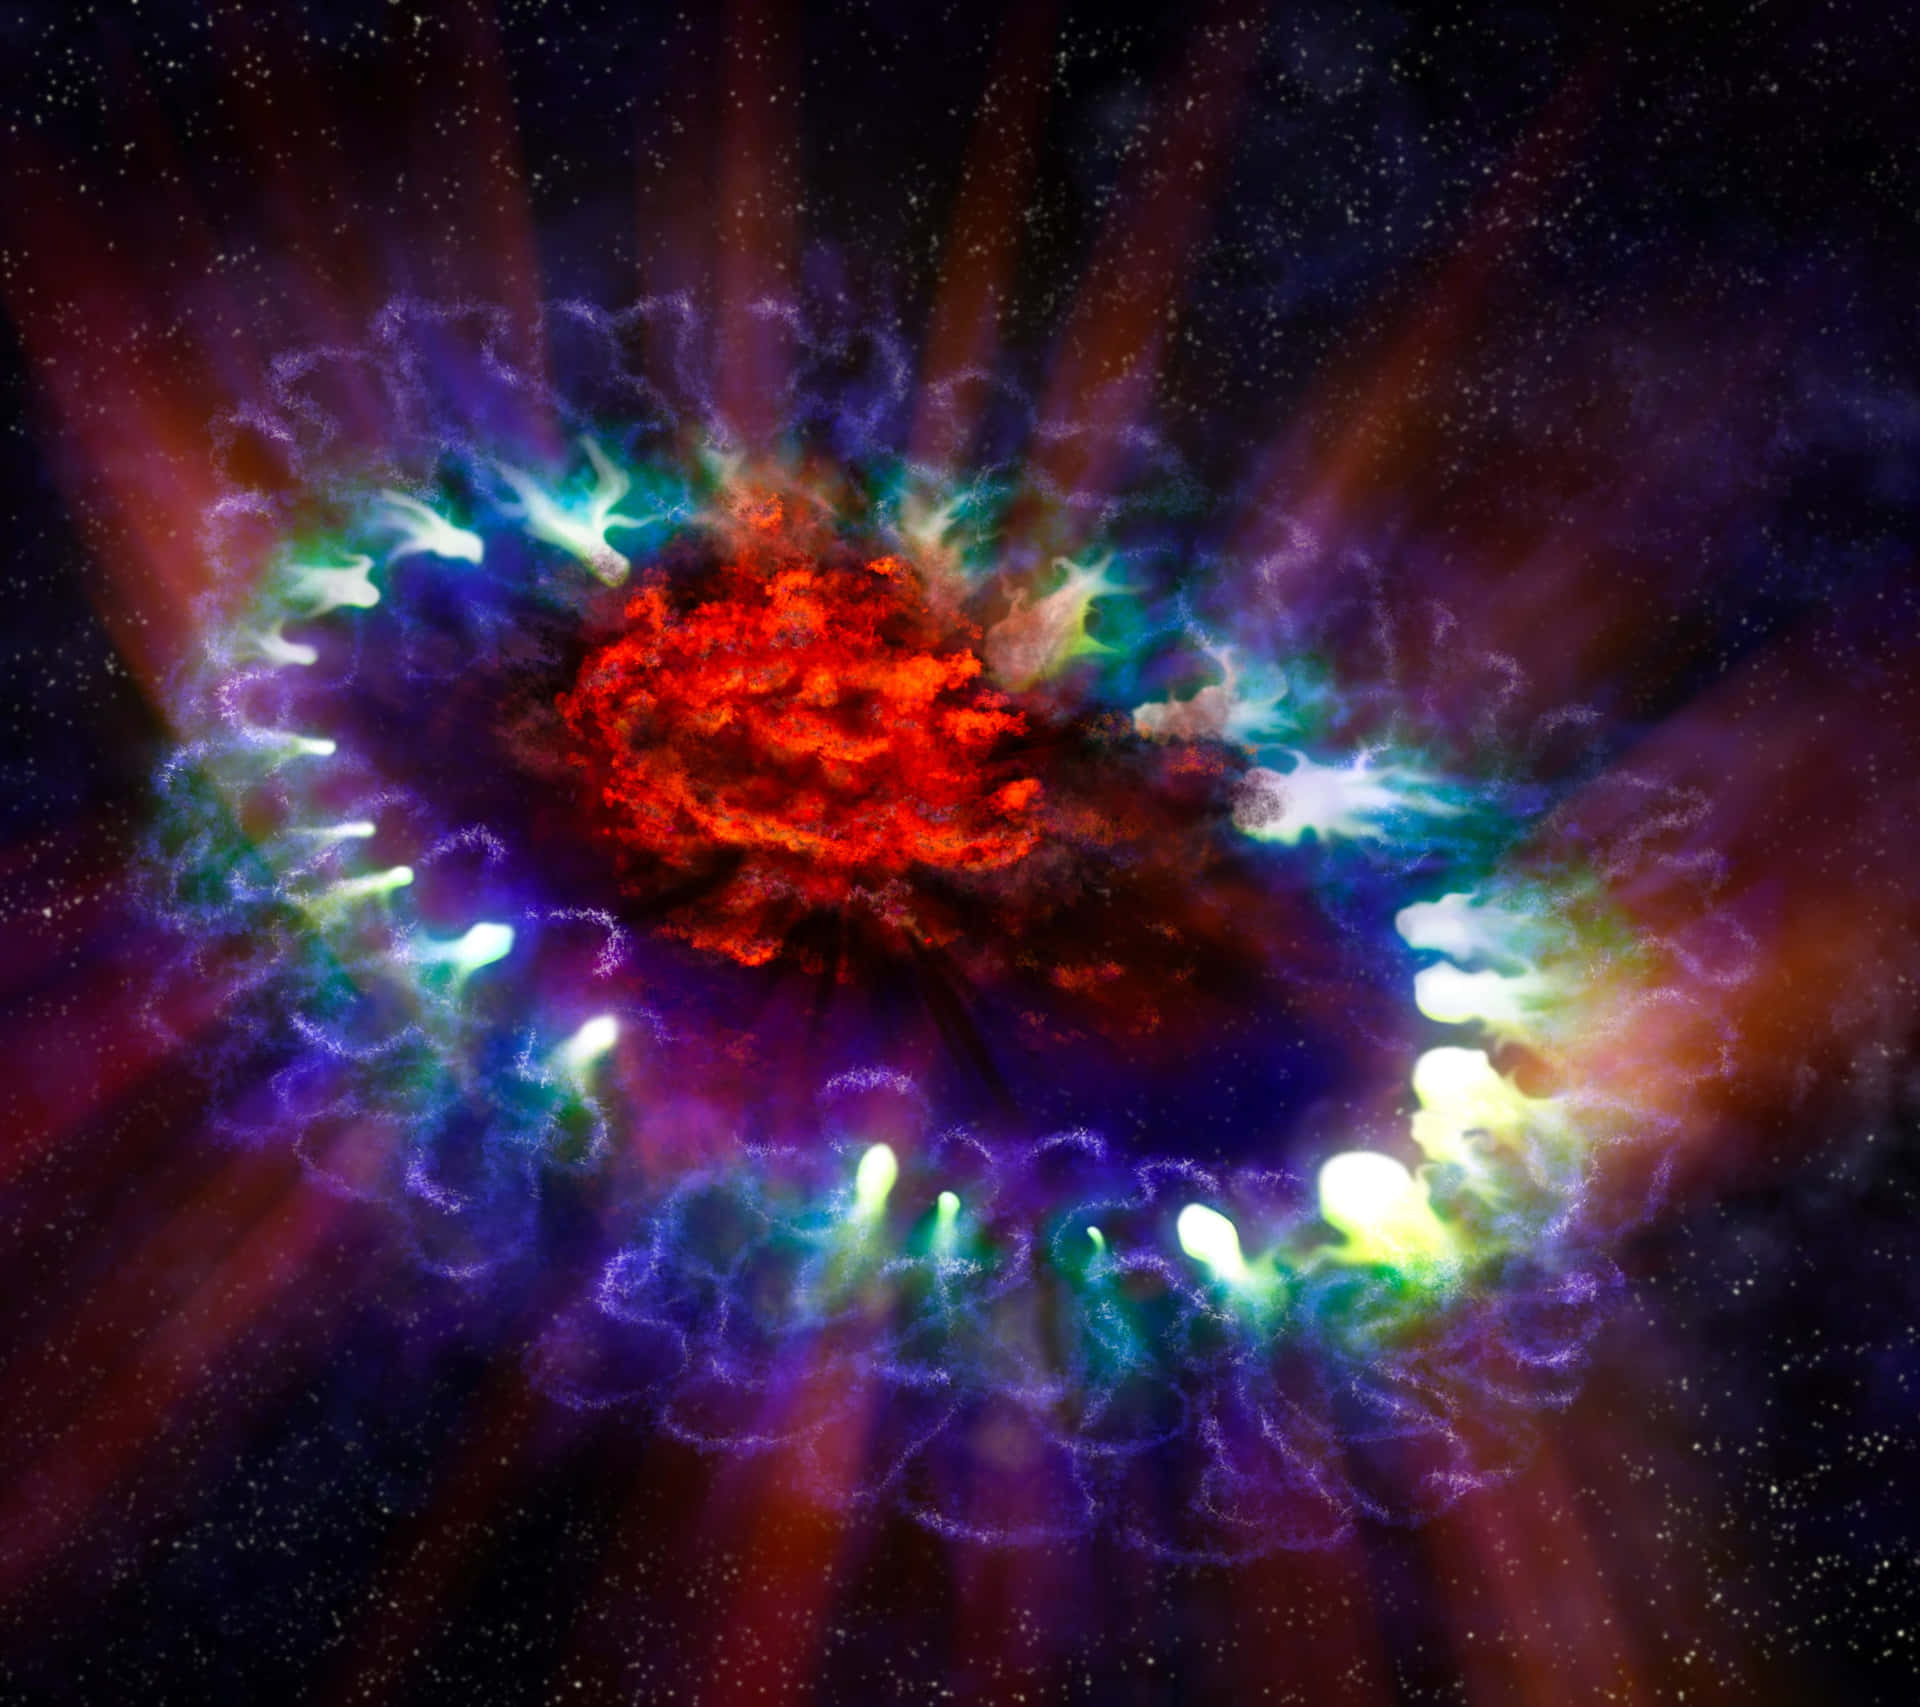 Caption: Spectacular Supernova Explosion in Deep Space Wallpaper